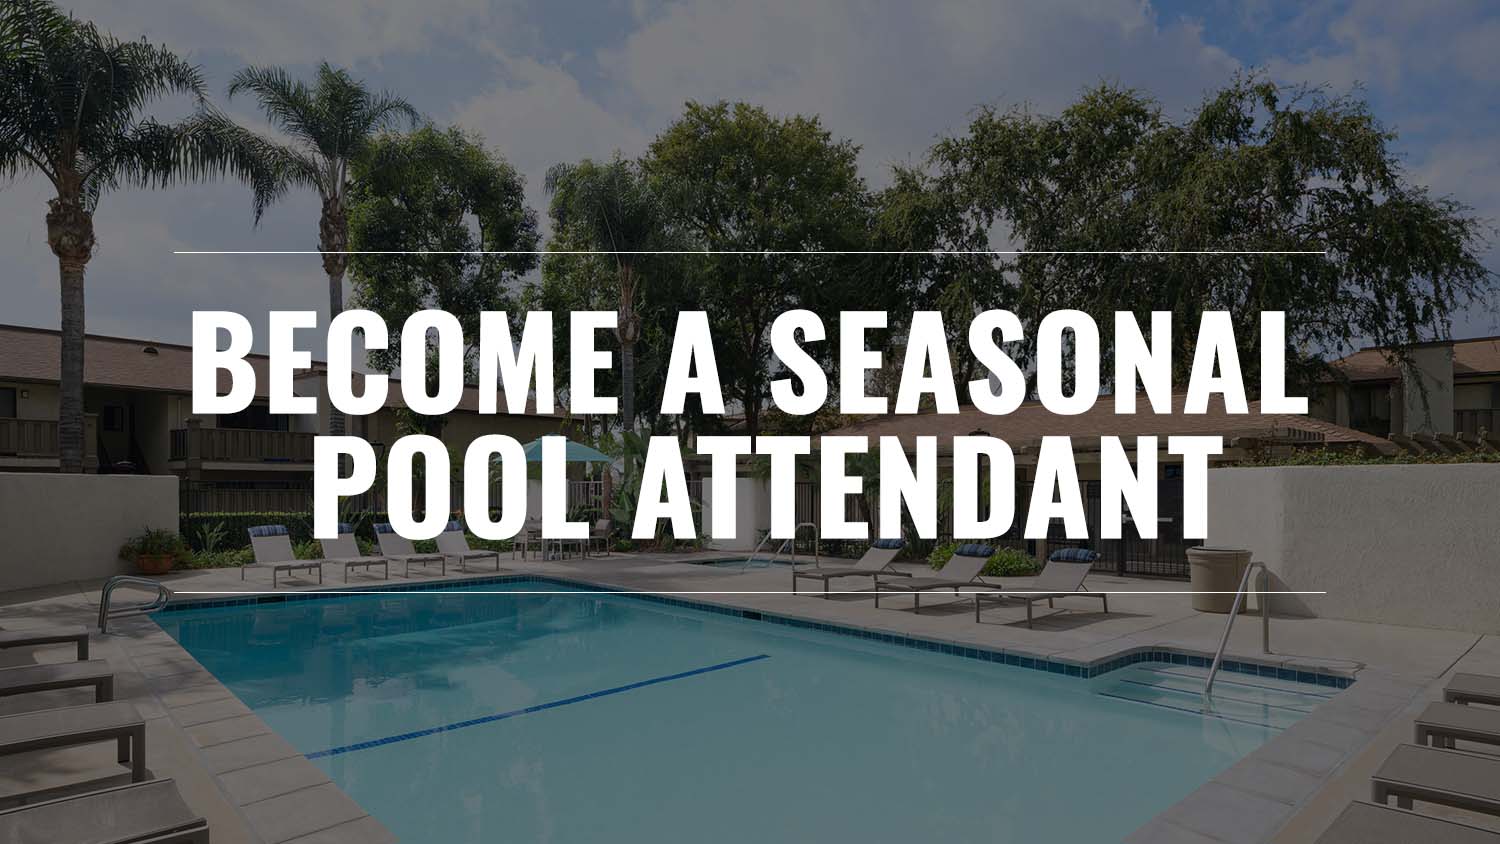 Become a Seasonal Pool Attendant